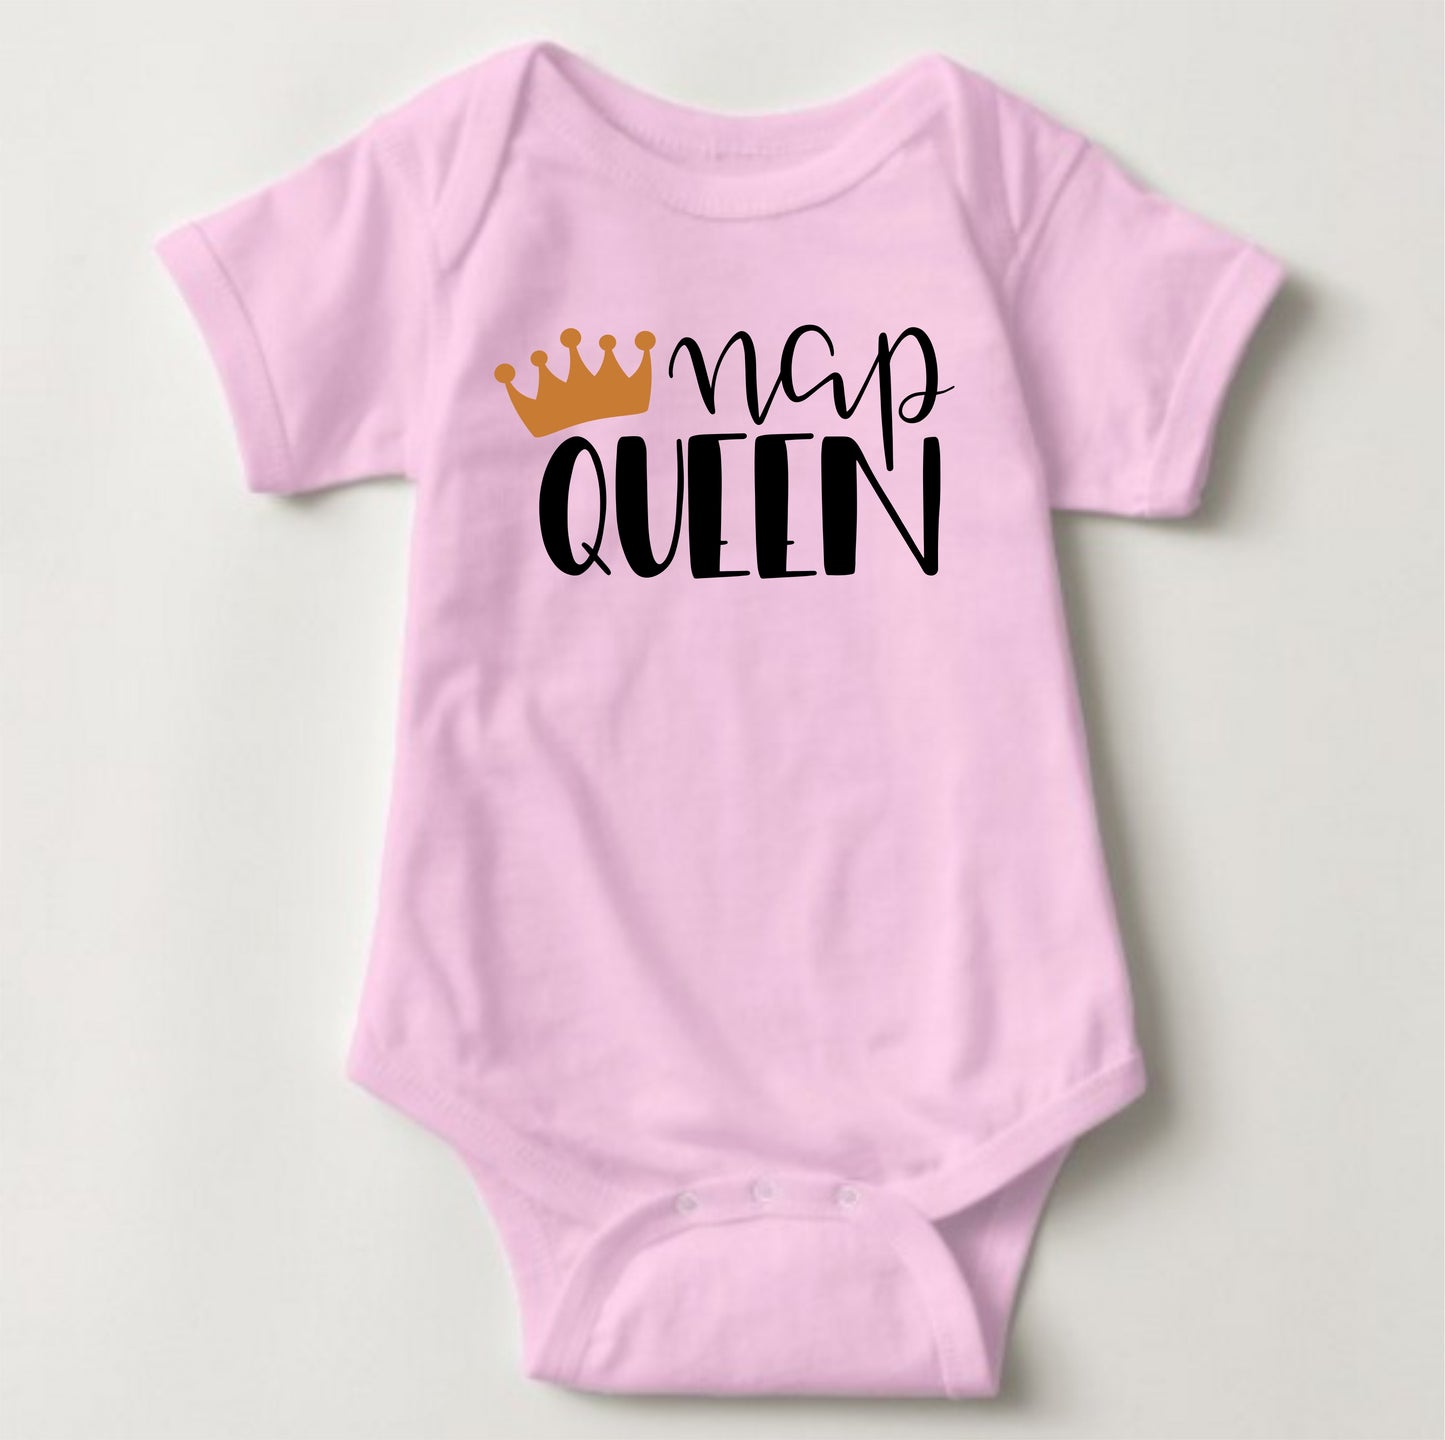 Baby Statement Onesies - Nap Queen - MYSTYLEMYCLOTHING